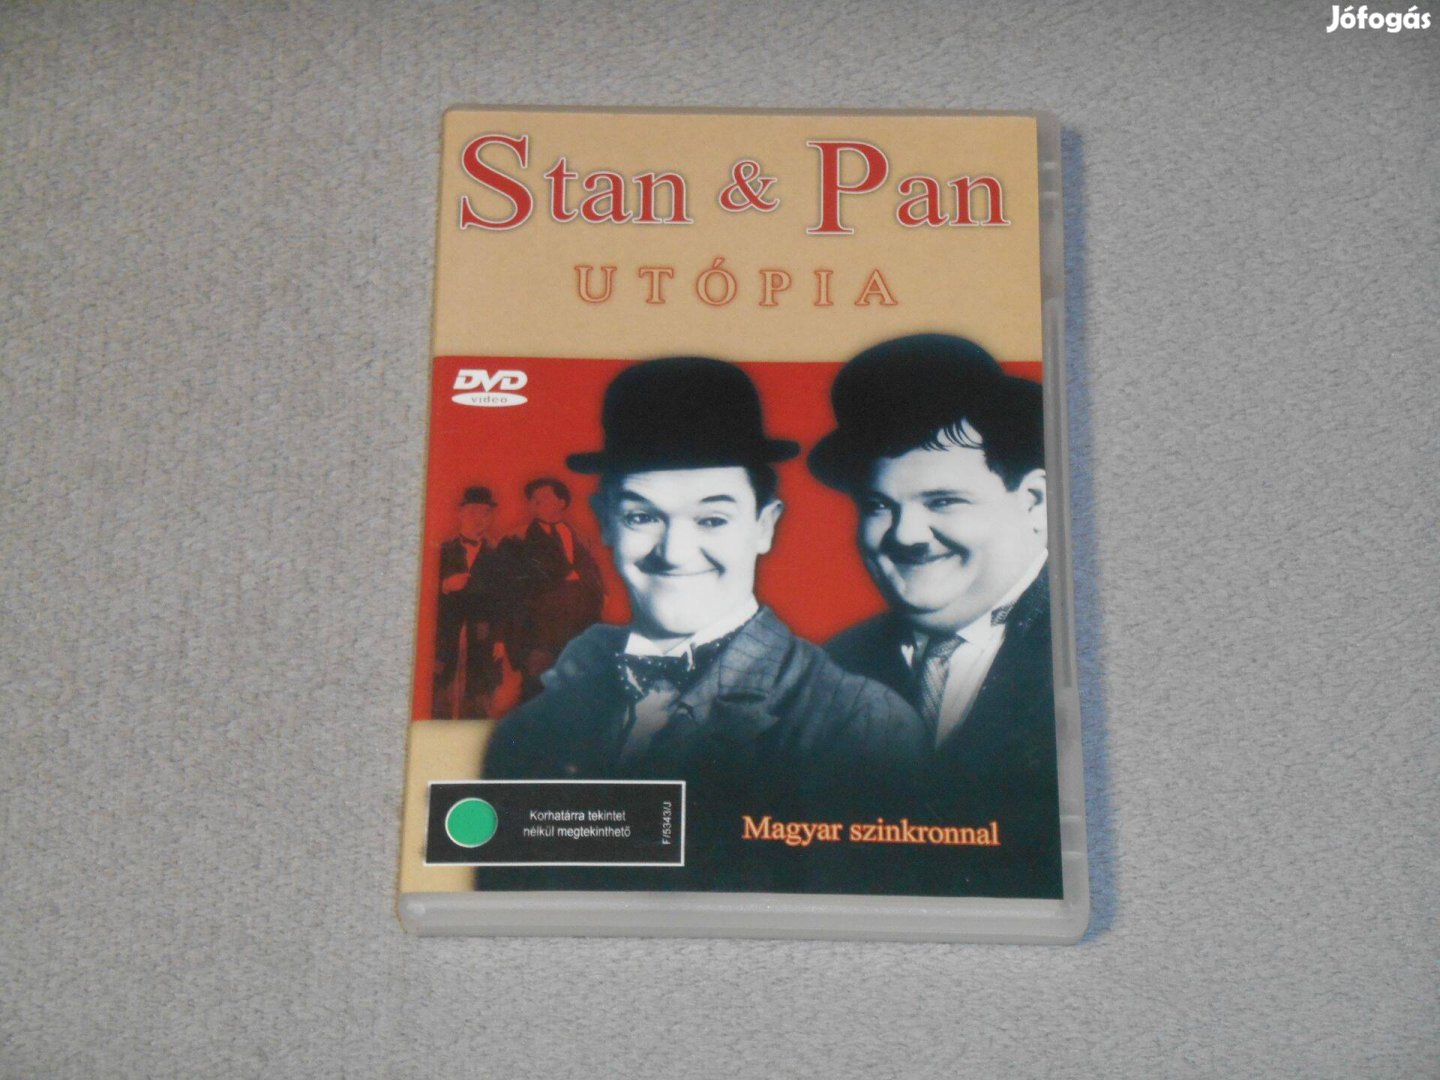 Stan & Pan - Utópia DVD film (Ritka!)